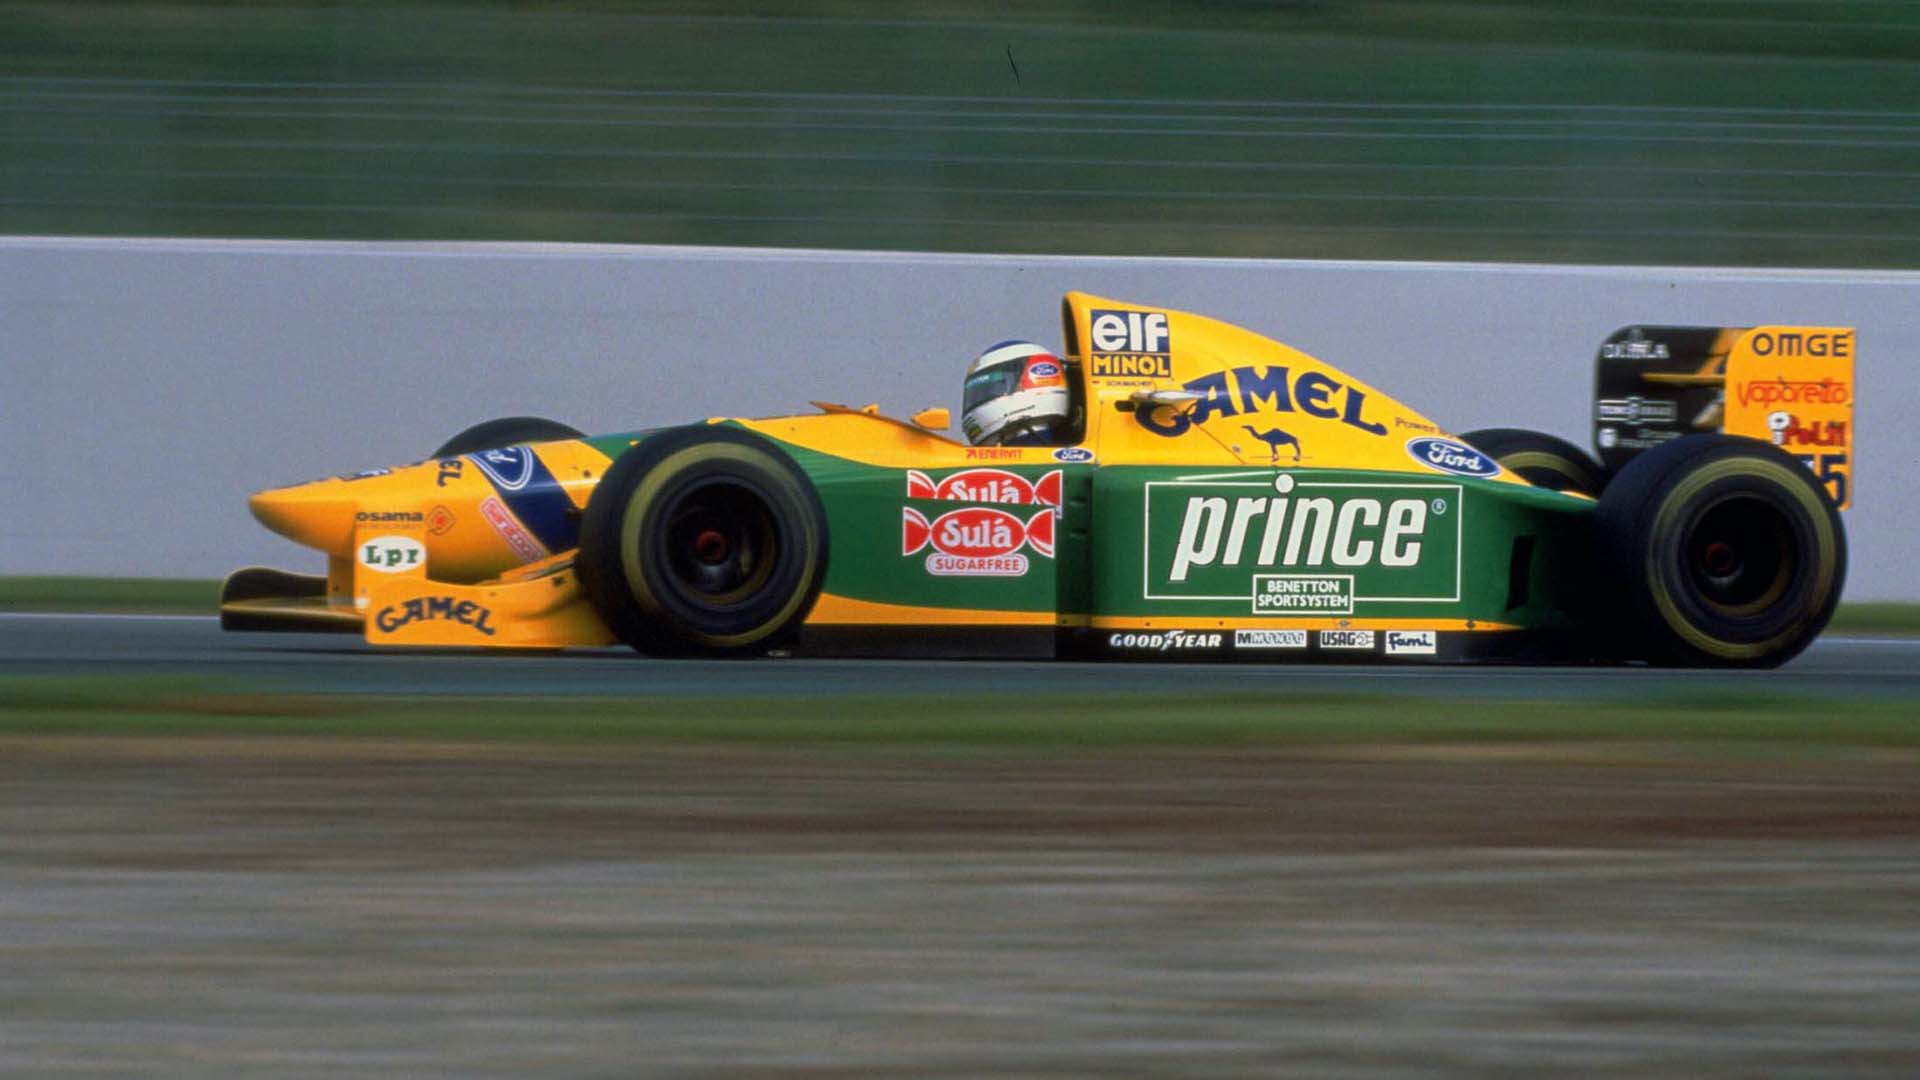 Spanish Grand Prix, Barcelona, Spain, 1993. Michael Schumacher at speed. CD#Motorsport5-8.